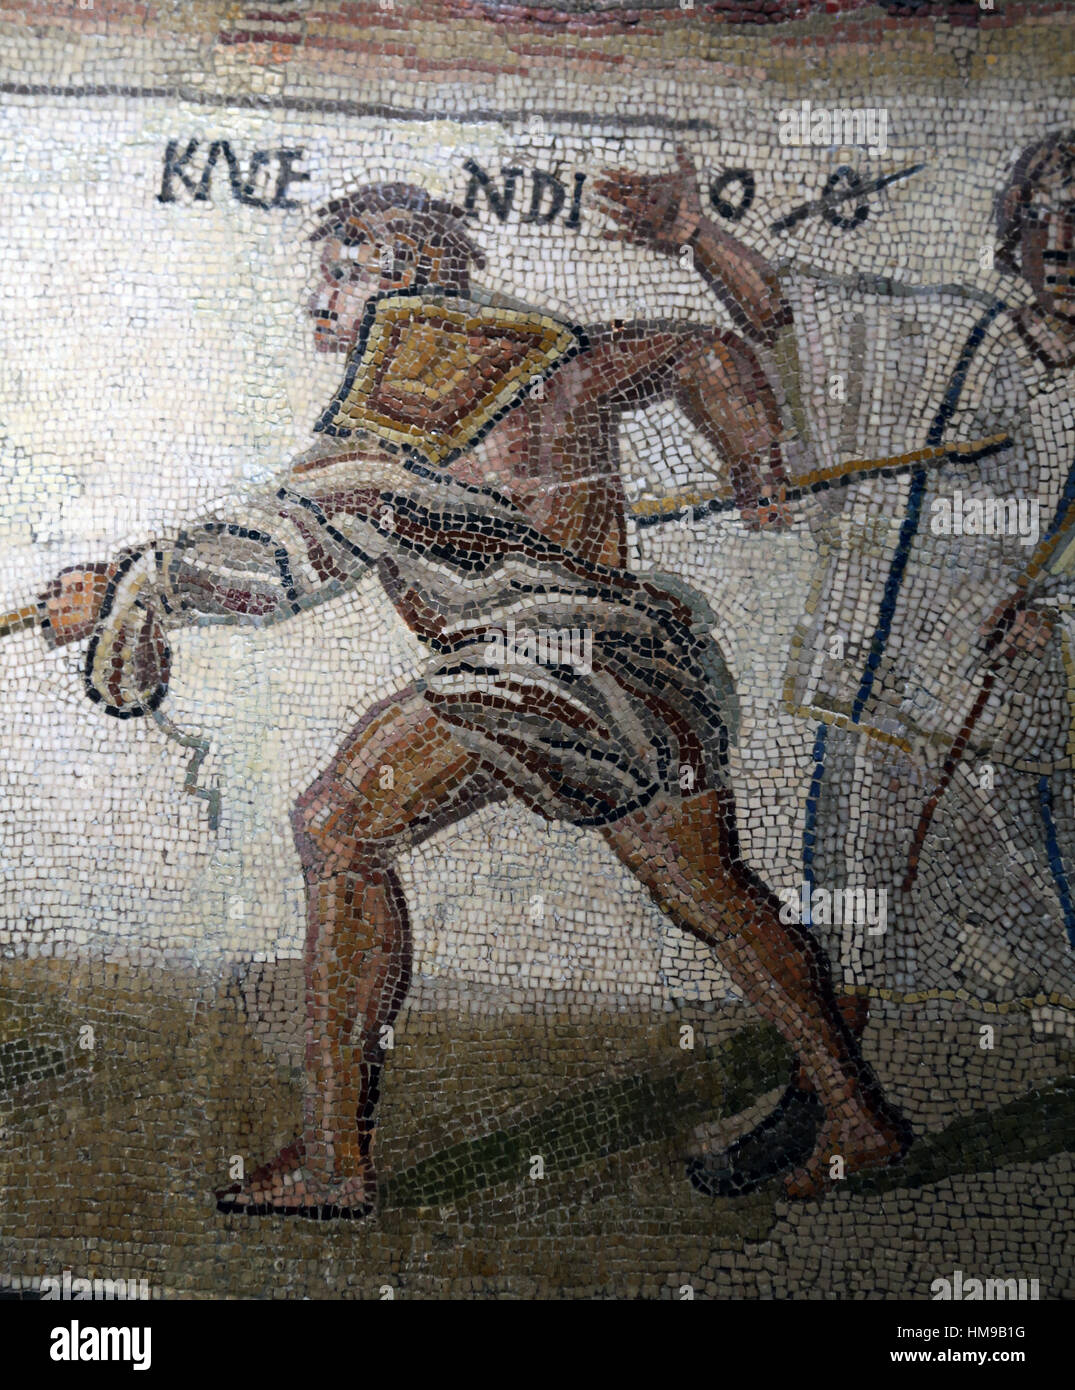 Secutor versus retiarius. Mosaic. Limestone. 3rd century. Rome. Detail. The retiarius Kalendio in mortal combat. Abbreviation o (obiit, death). Nation Stock Photo